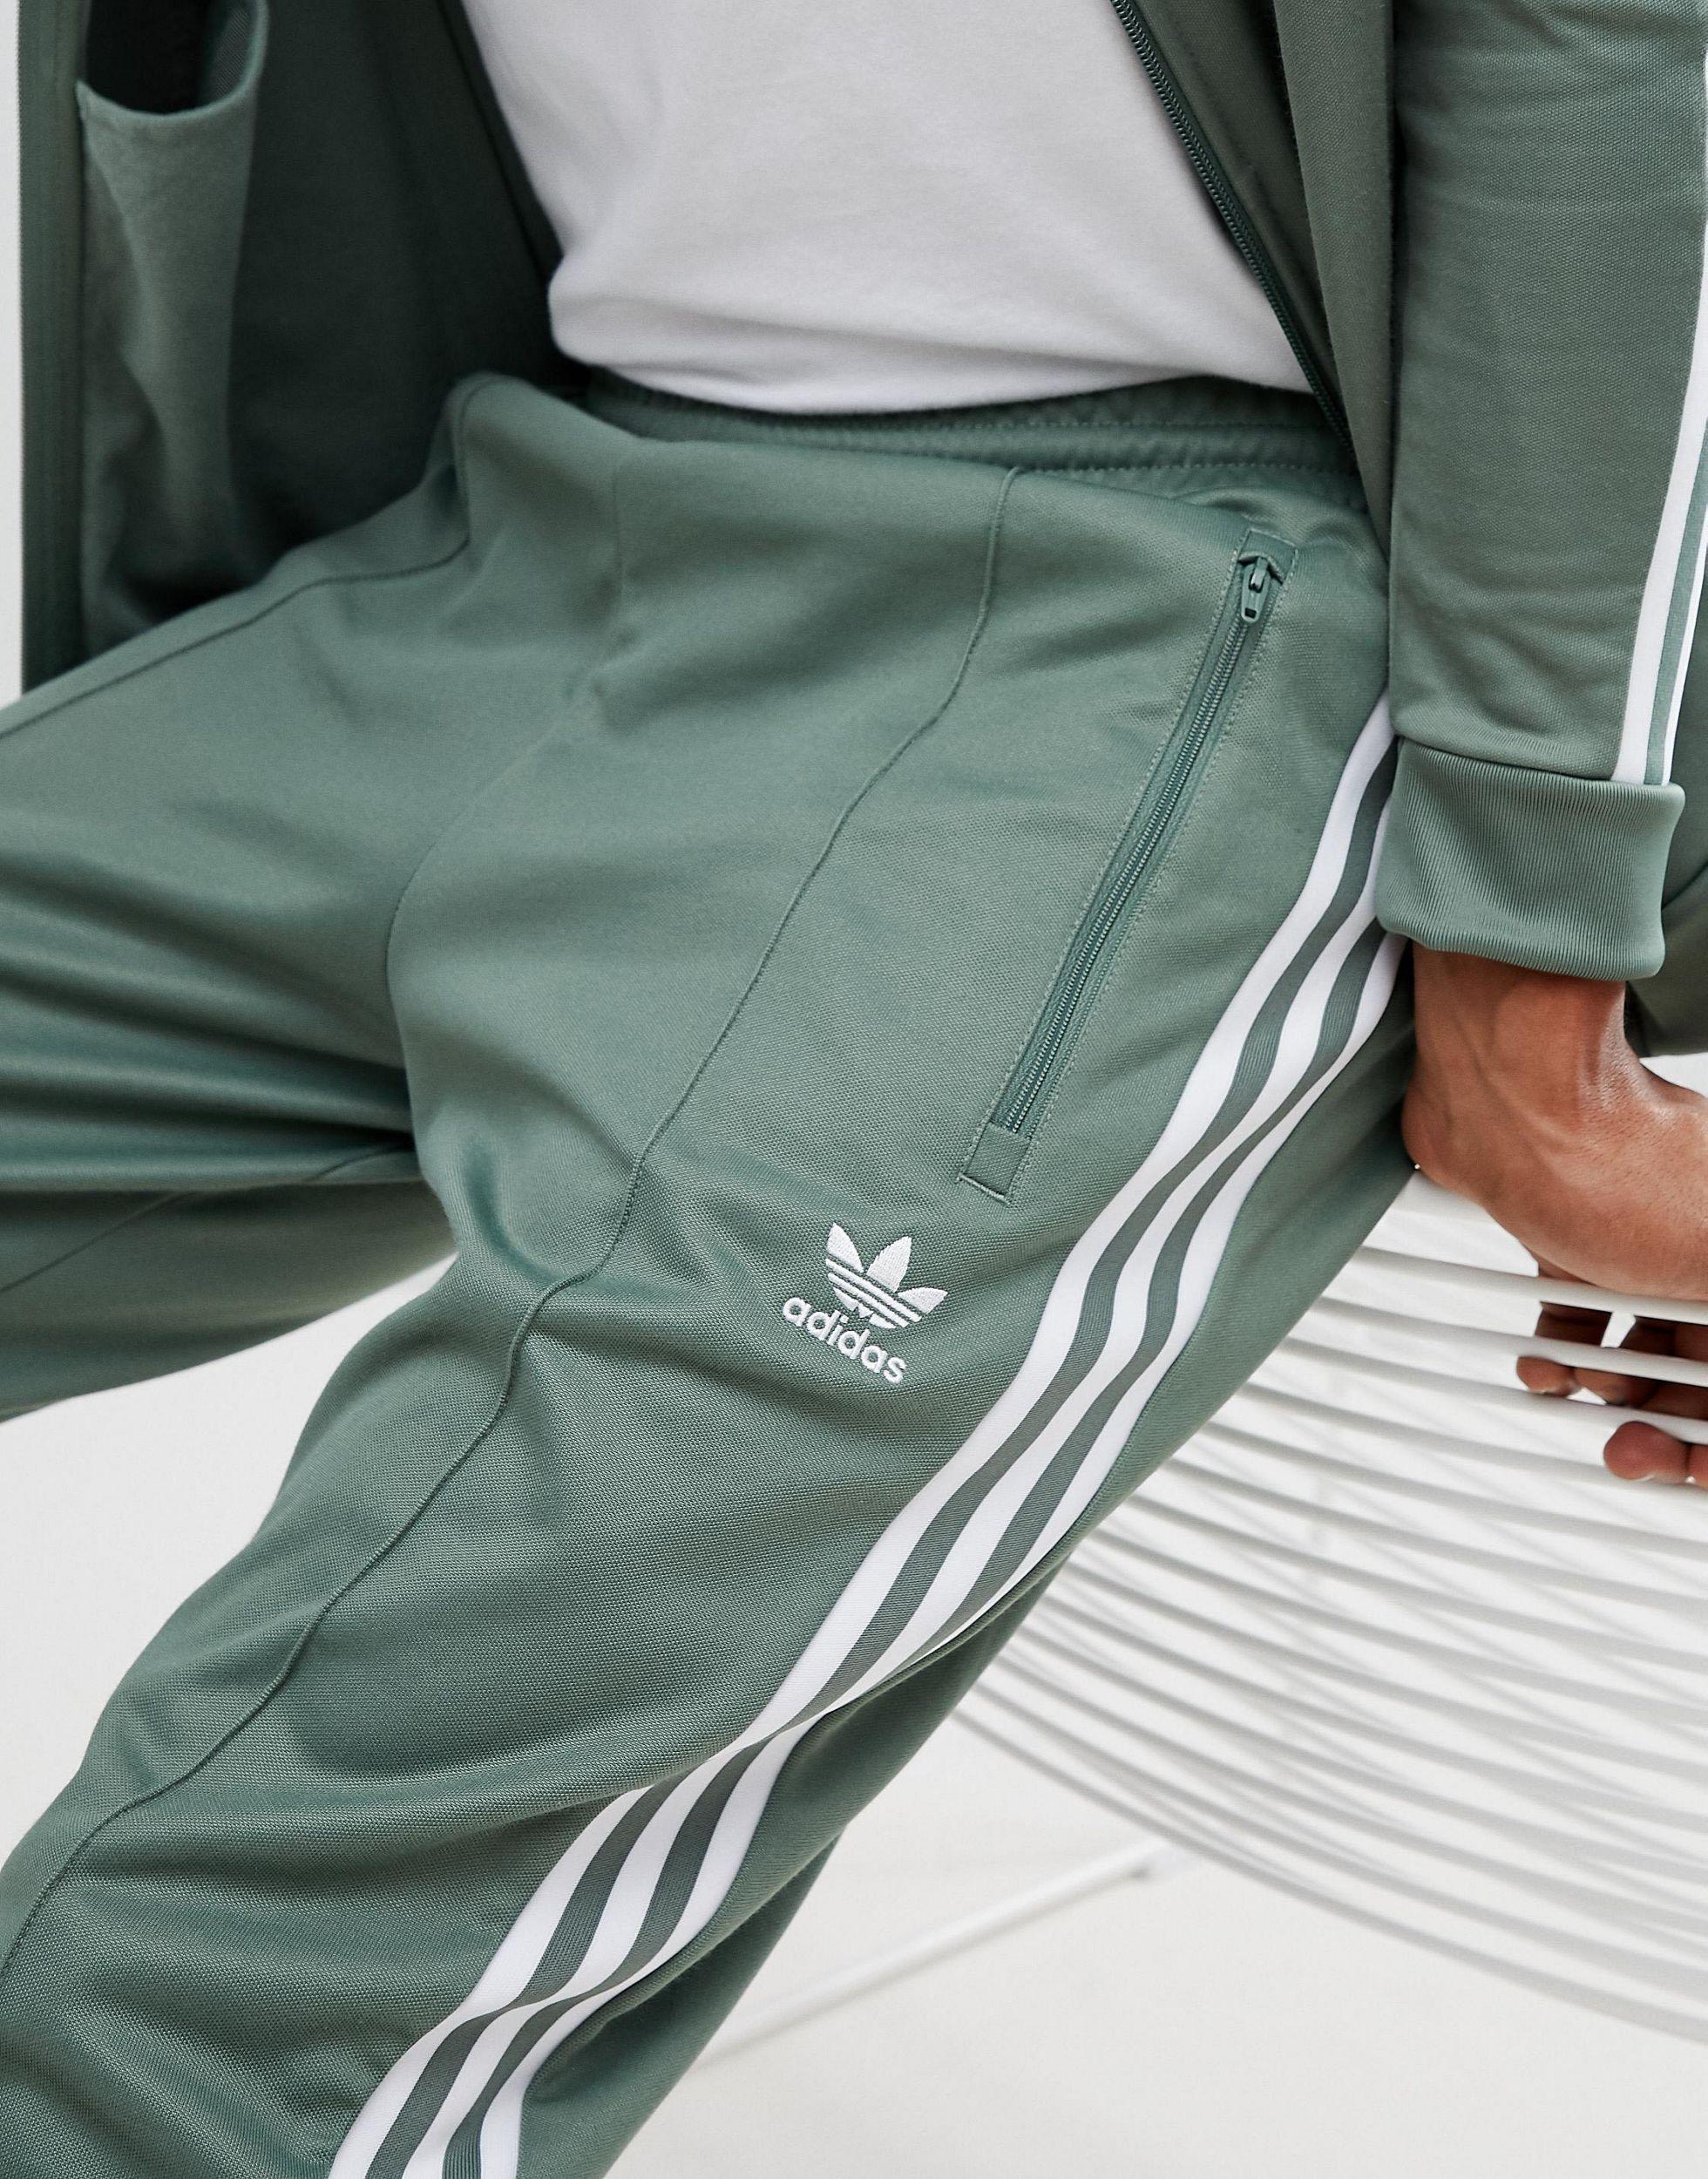 adidas Originals Beckenbauer Joggers In Green Dh5818 for Men - Lyst